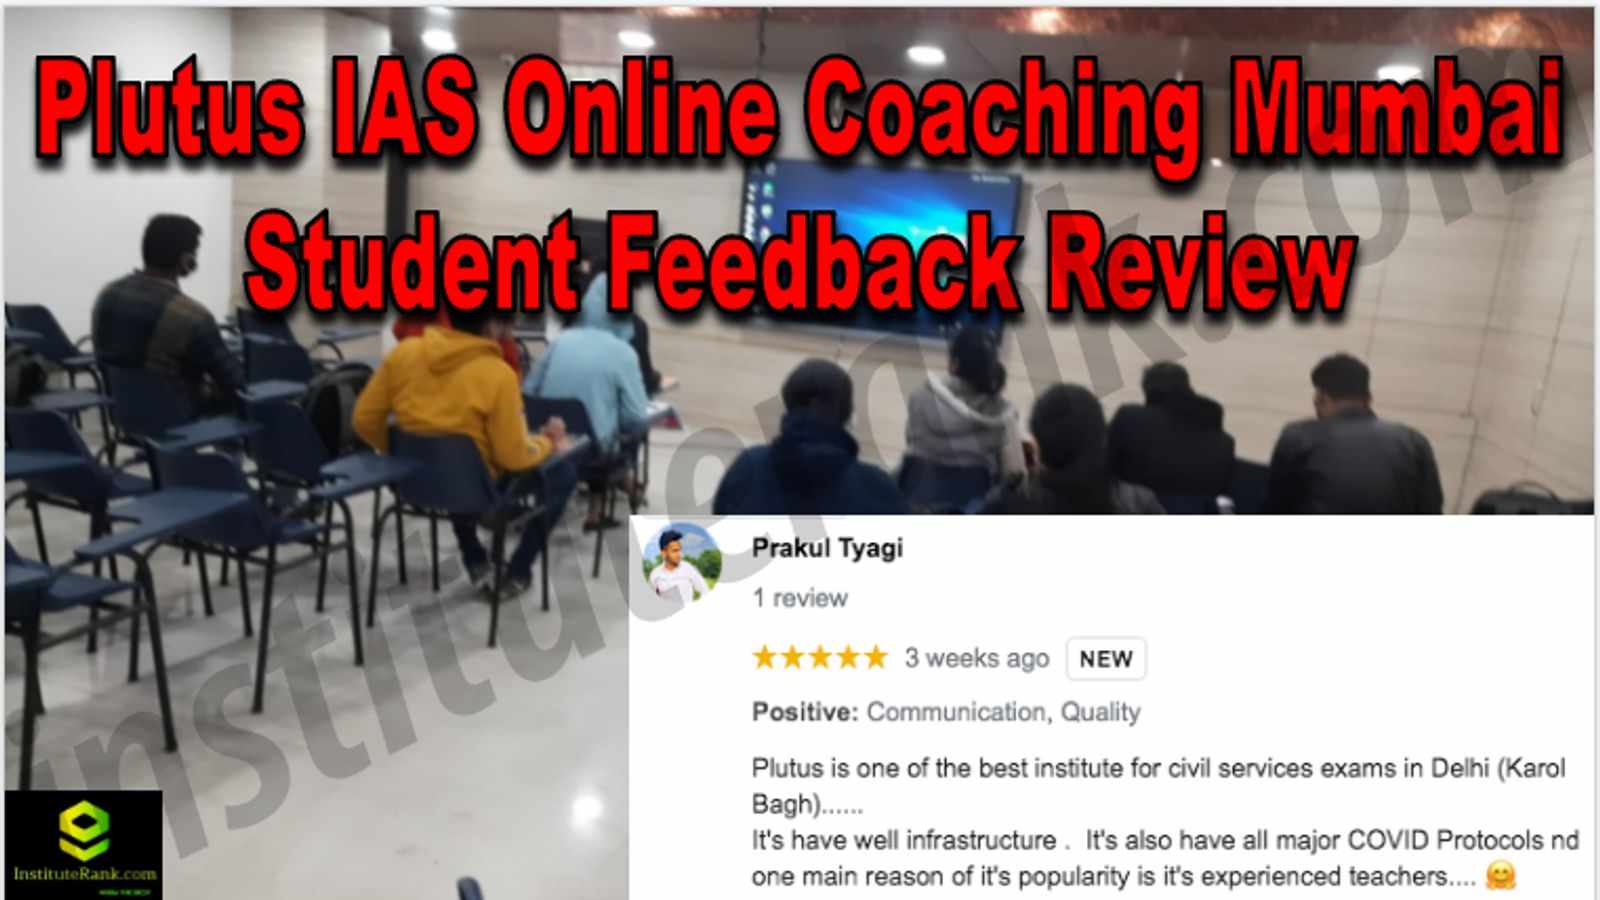 Plutus IAS Online Coaching Mumbai Student Feedback Review